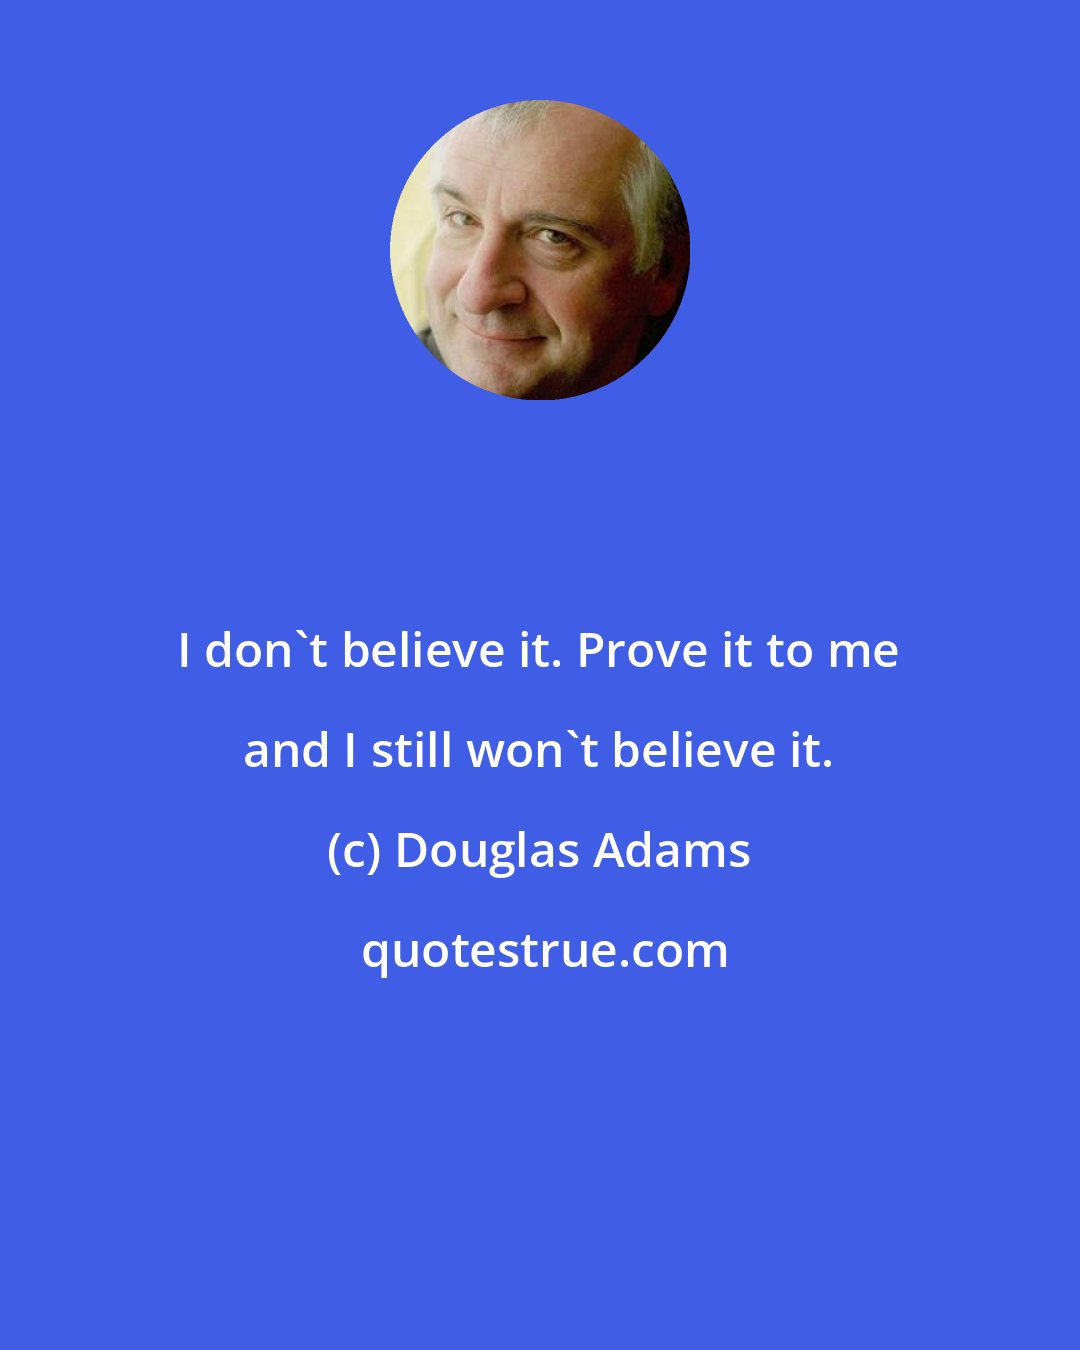 Douglas Adams: I don't believe it. Prove it to me and I still won't believe it.